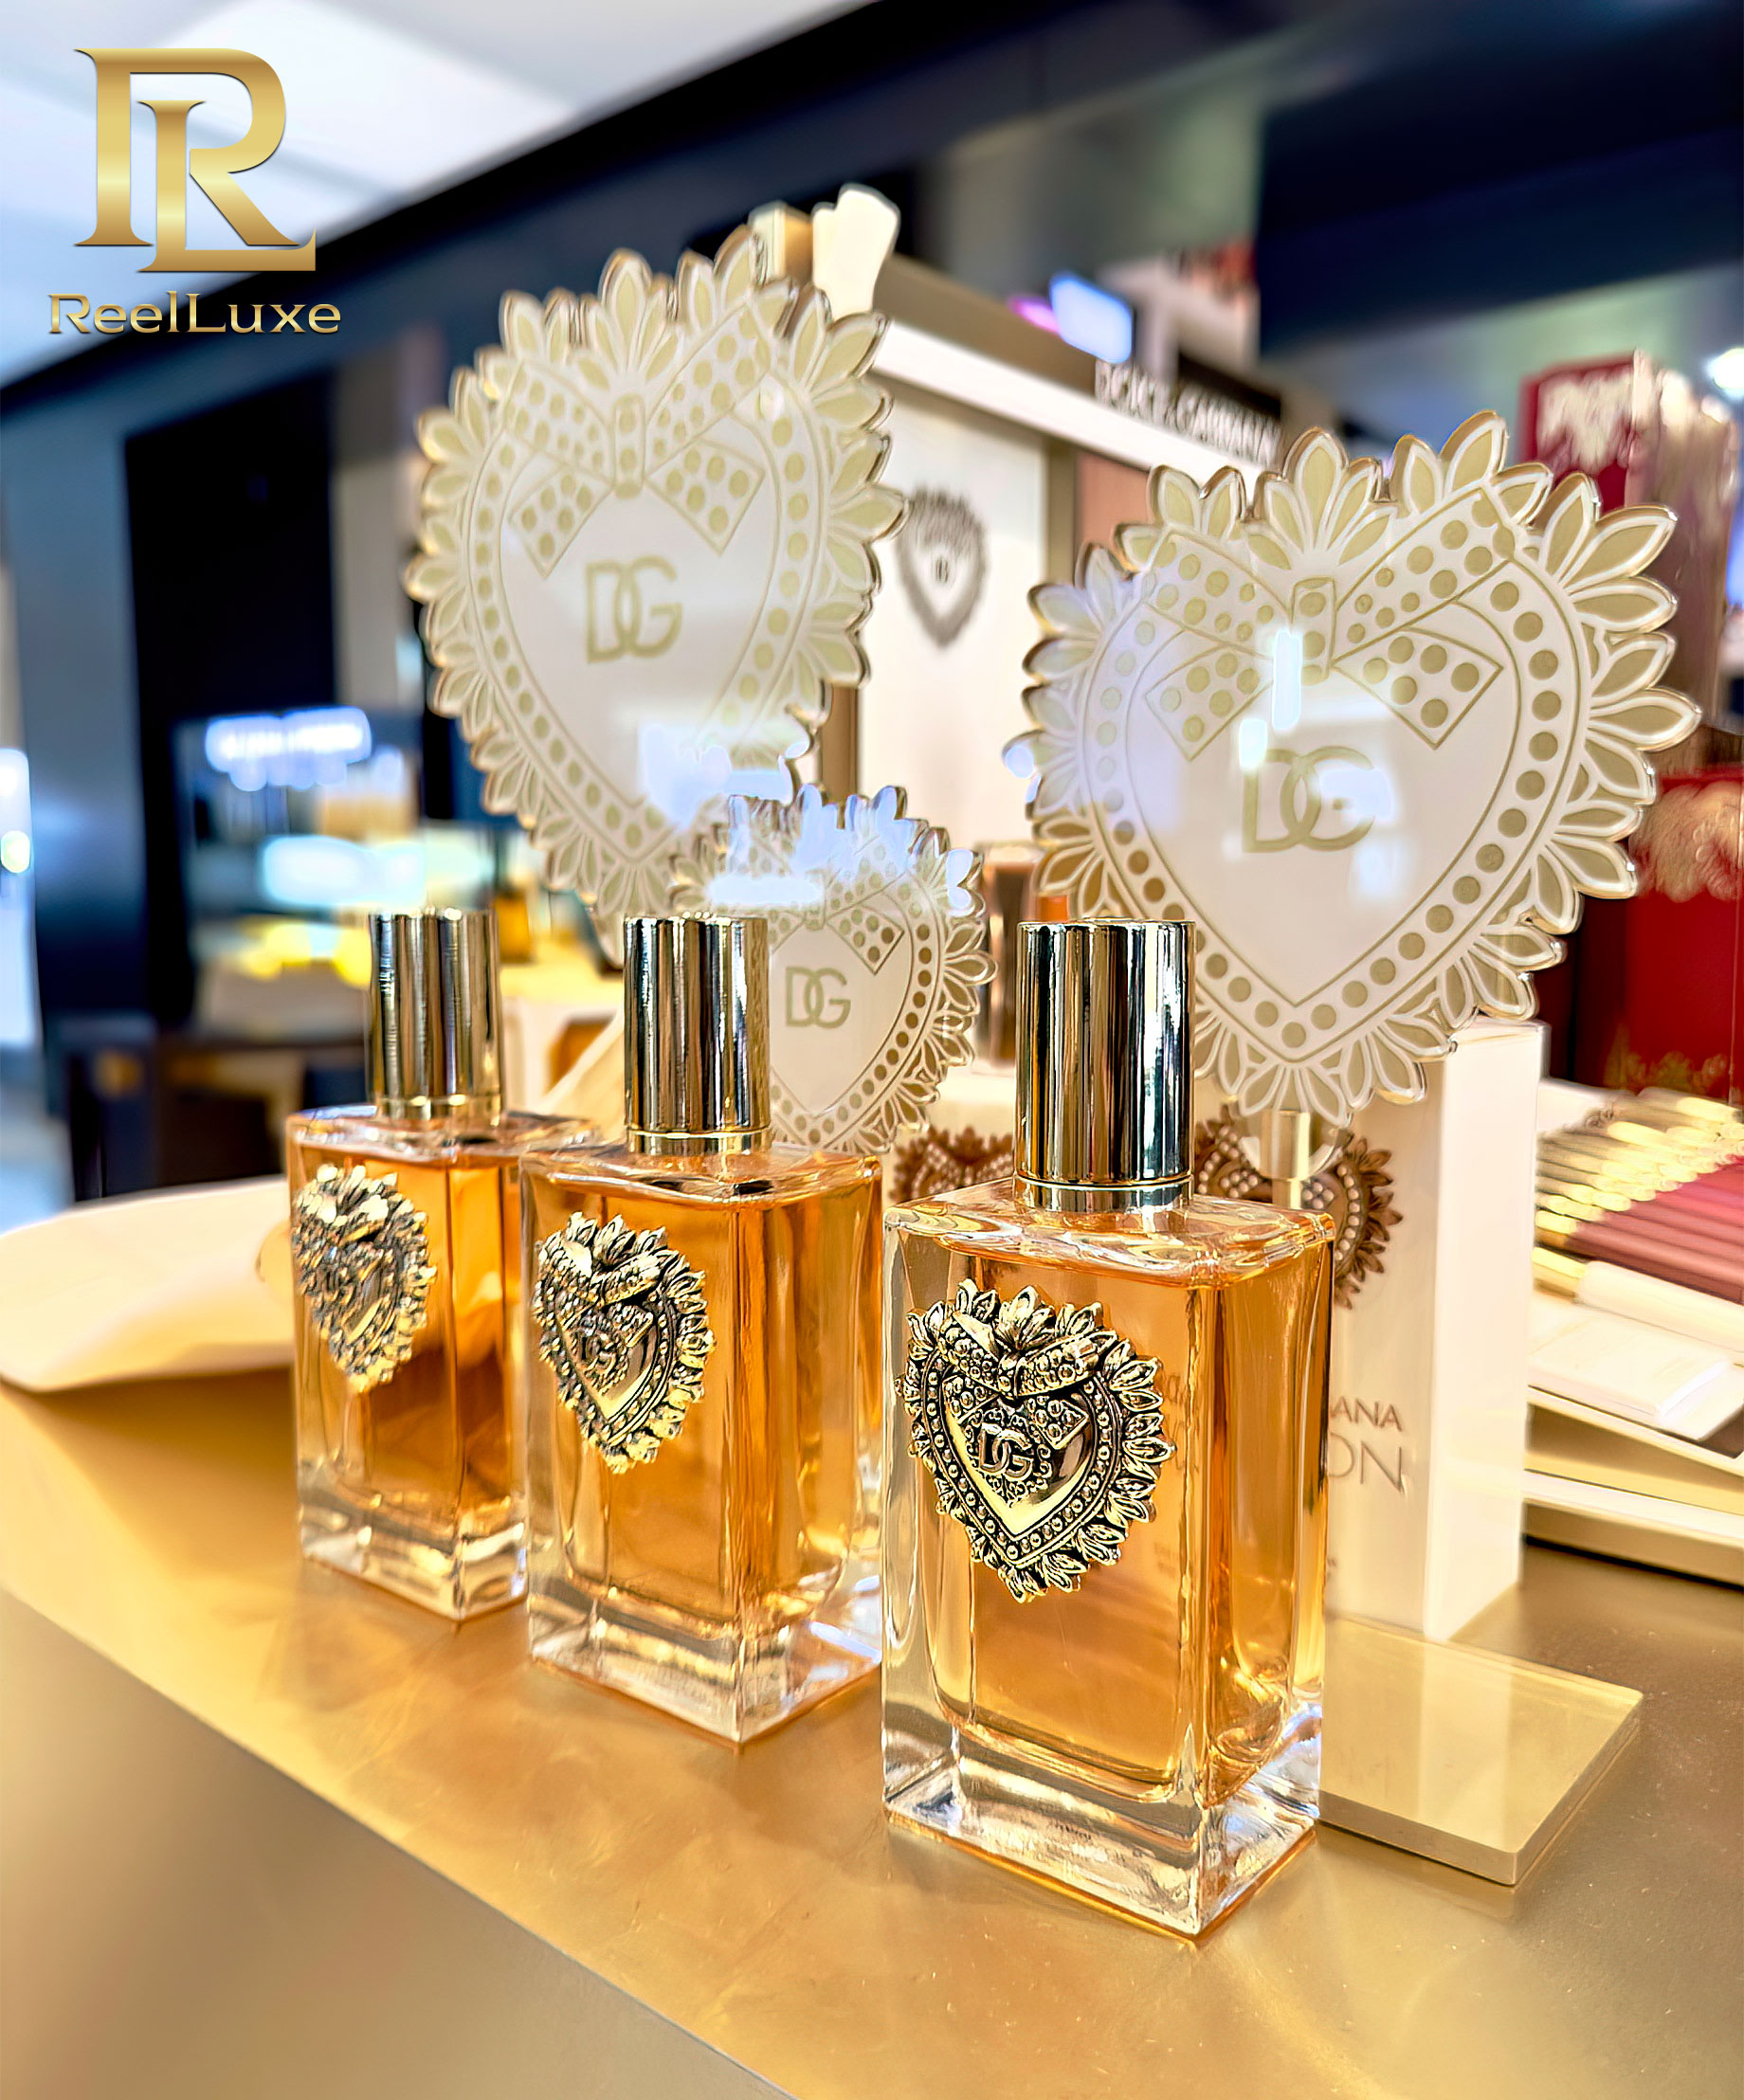 Dolce & Gabbana - D&G Devotion Devotion Eau de Parfum - Rinascente - Roma Via del Tritone - Rome, Italy